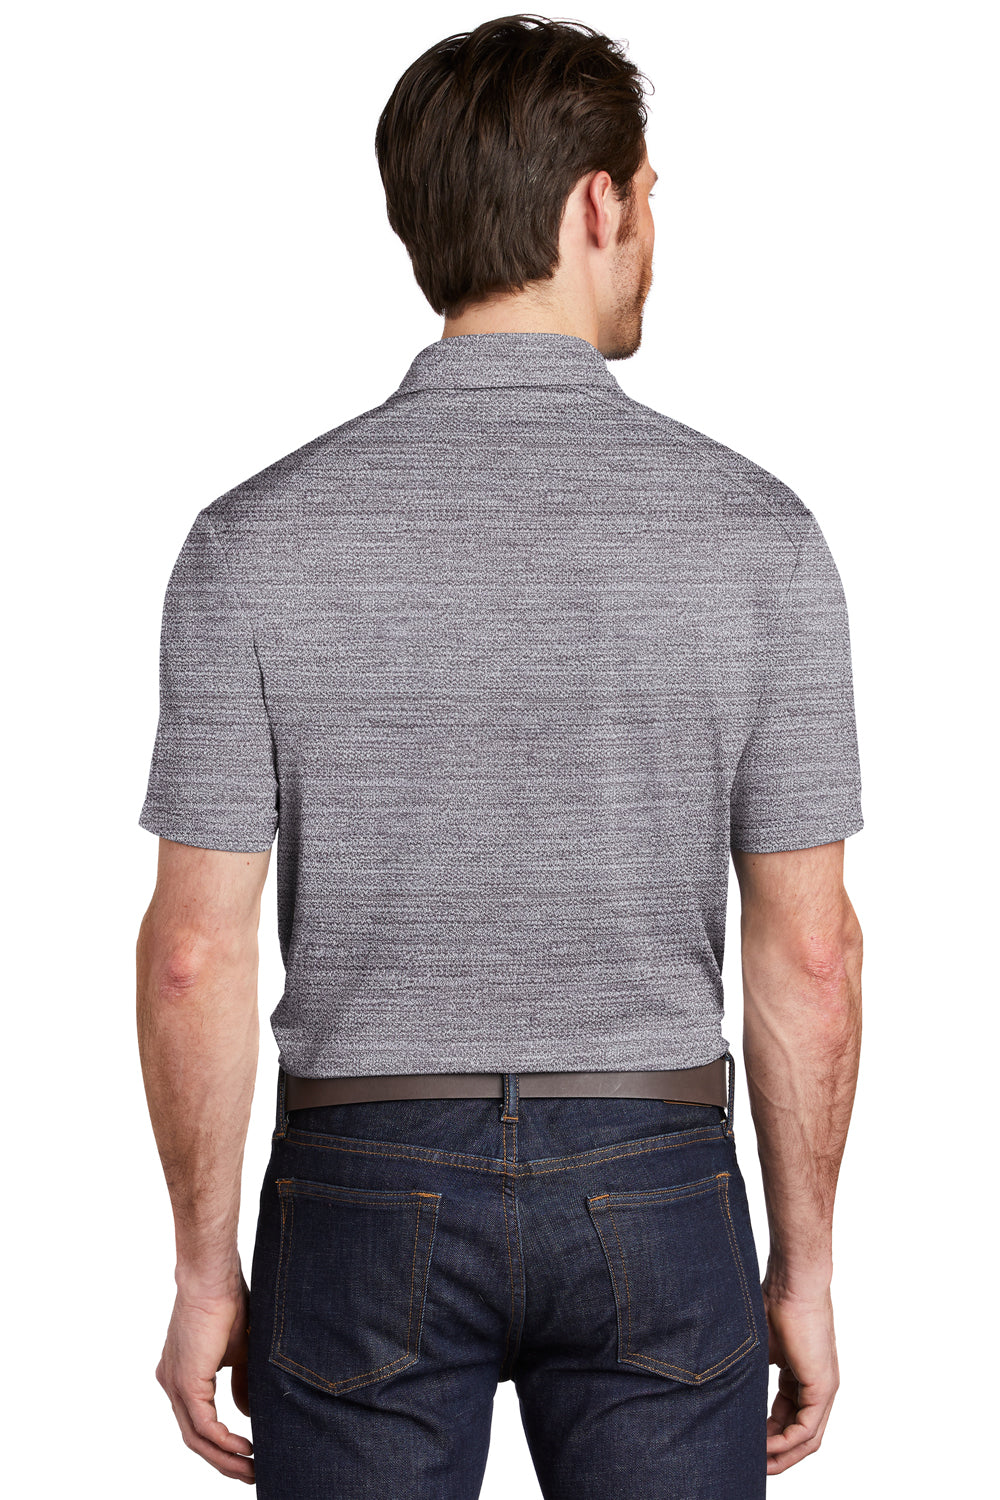 Port Authority Mens Stretch Short Sleeve Polo Shirt Graphite Grey/White Side